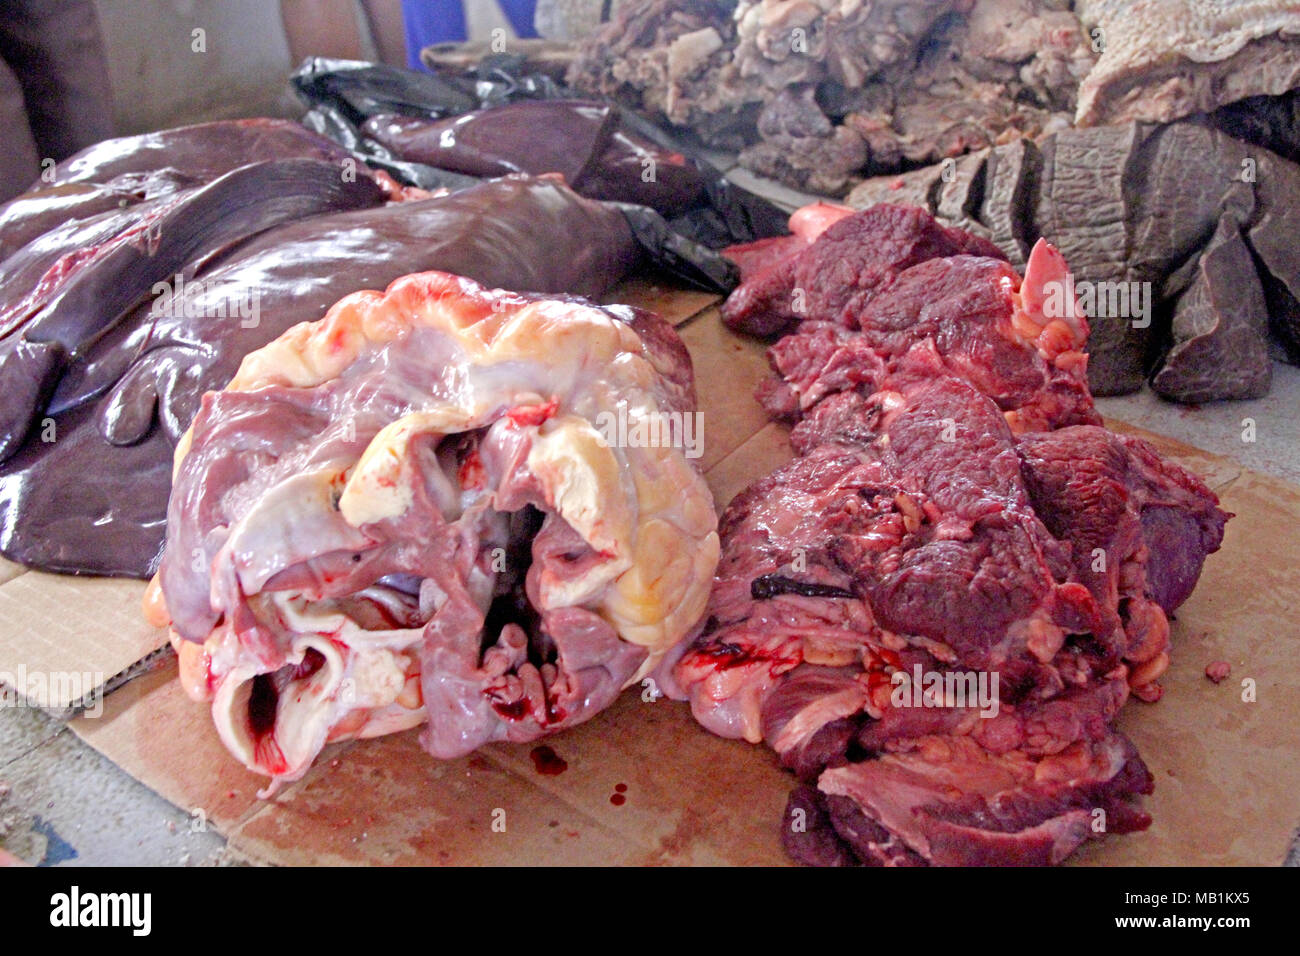 La carne, el mercado libre, Belem, Paraiba, Brasil Foto de stock